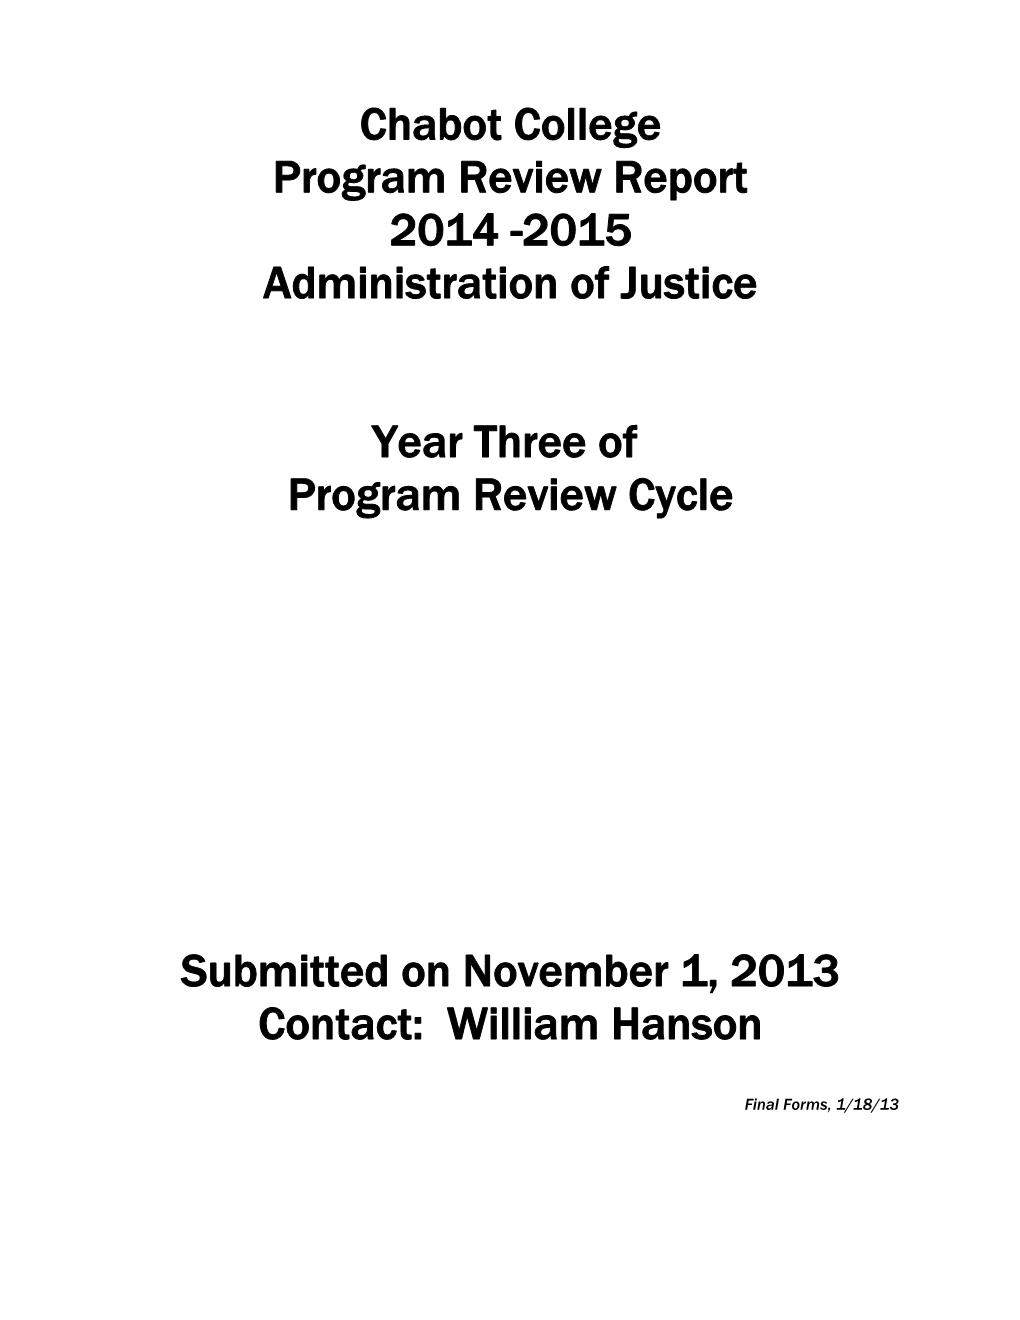 Program Review Report